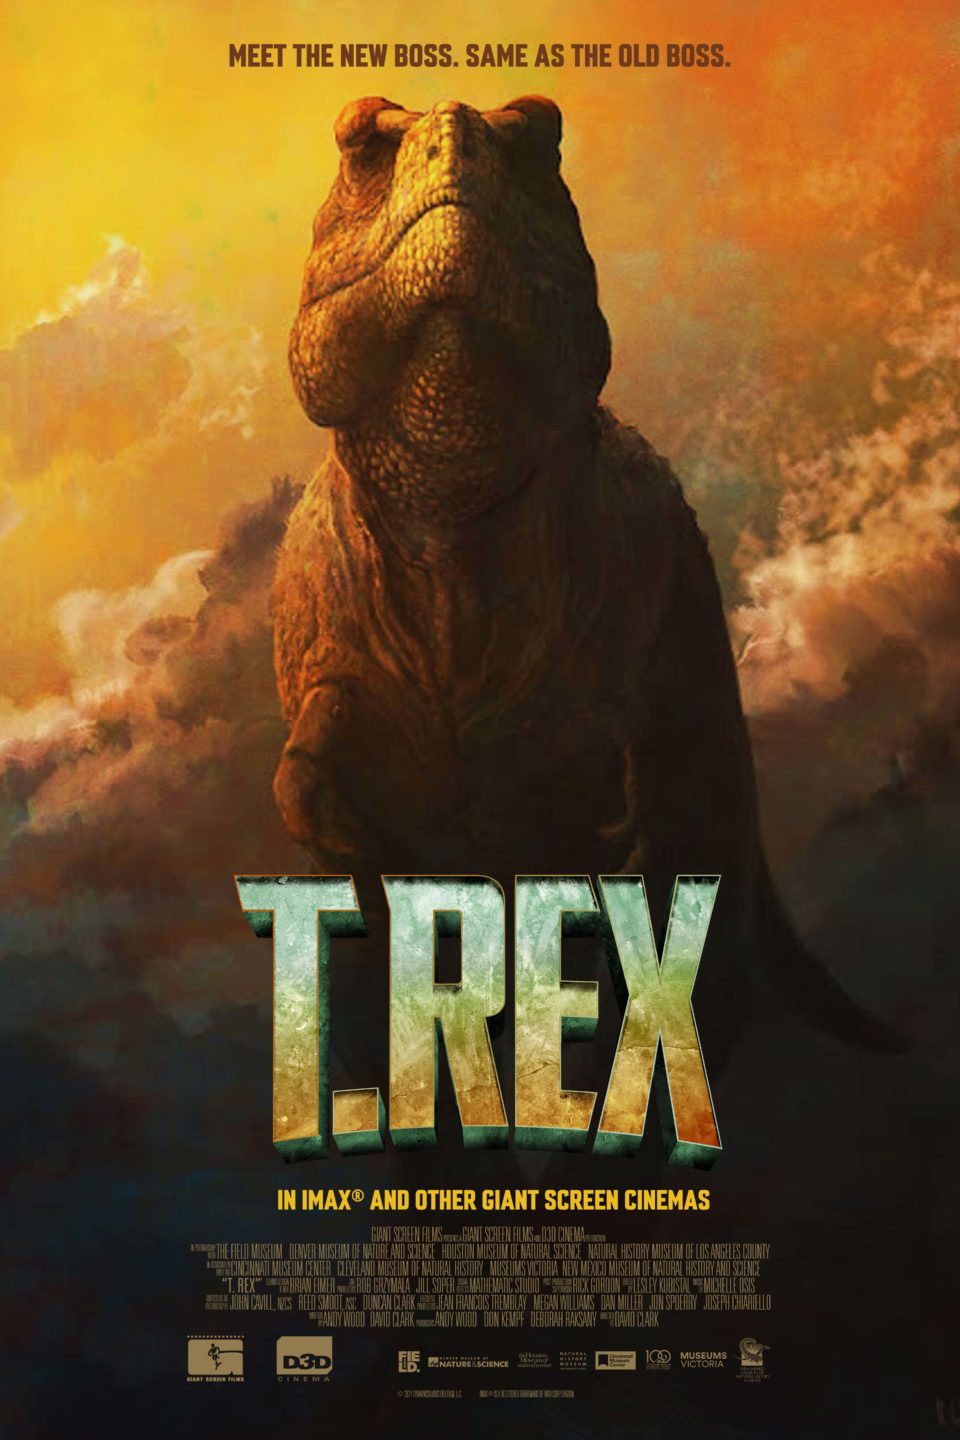 'T.REX 3D in IMAX 4K LASER DIGITAL' core news picture